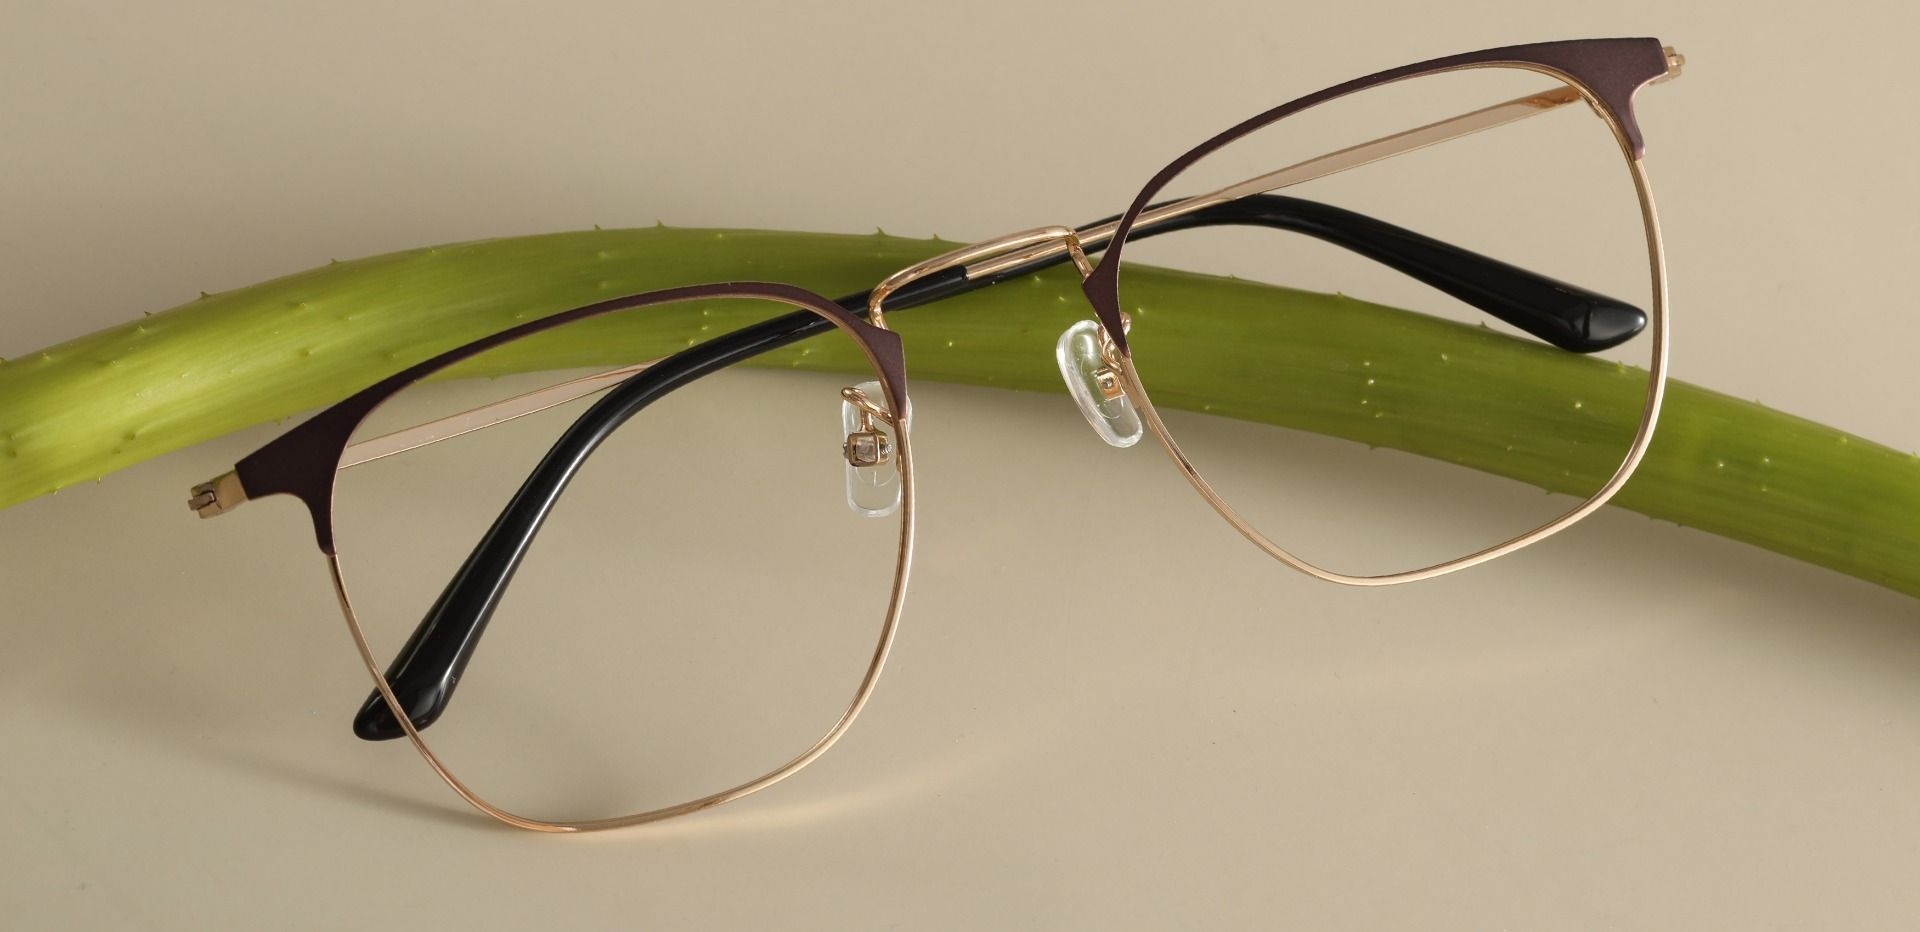 Nichols Browline Progressive Glasses - Brown